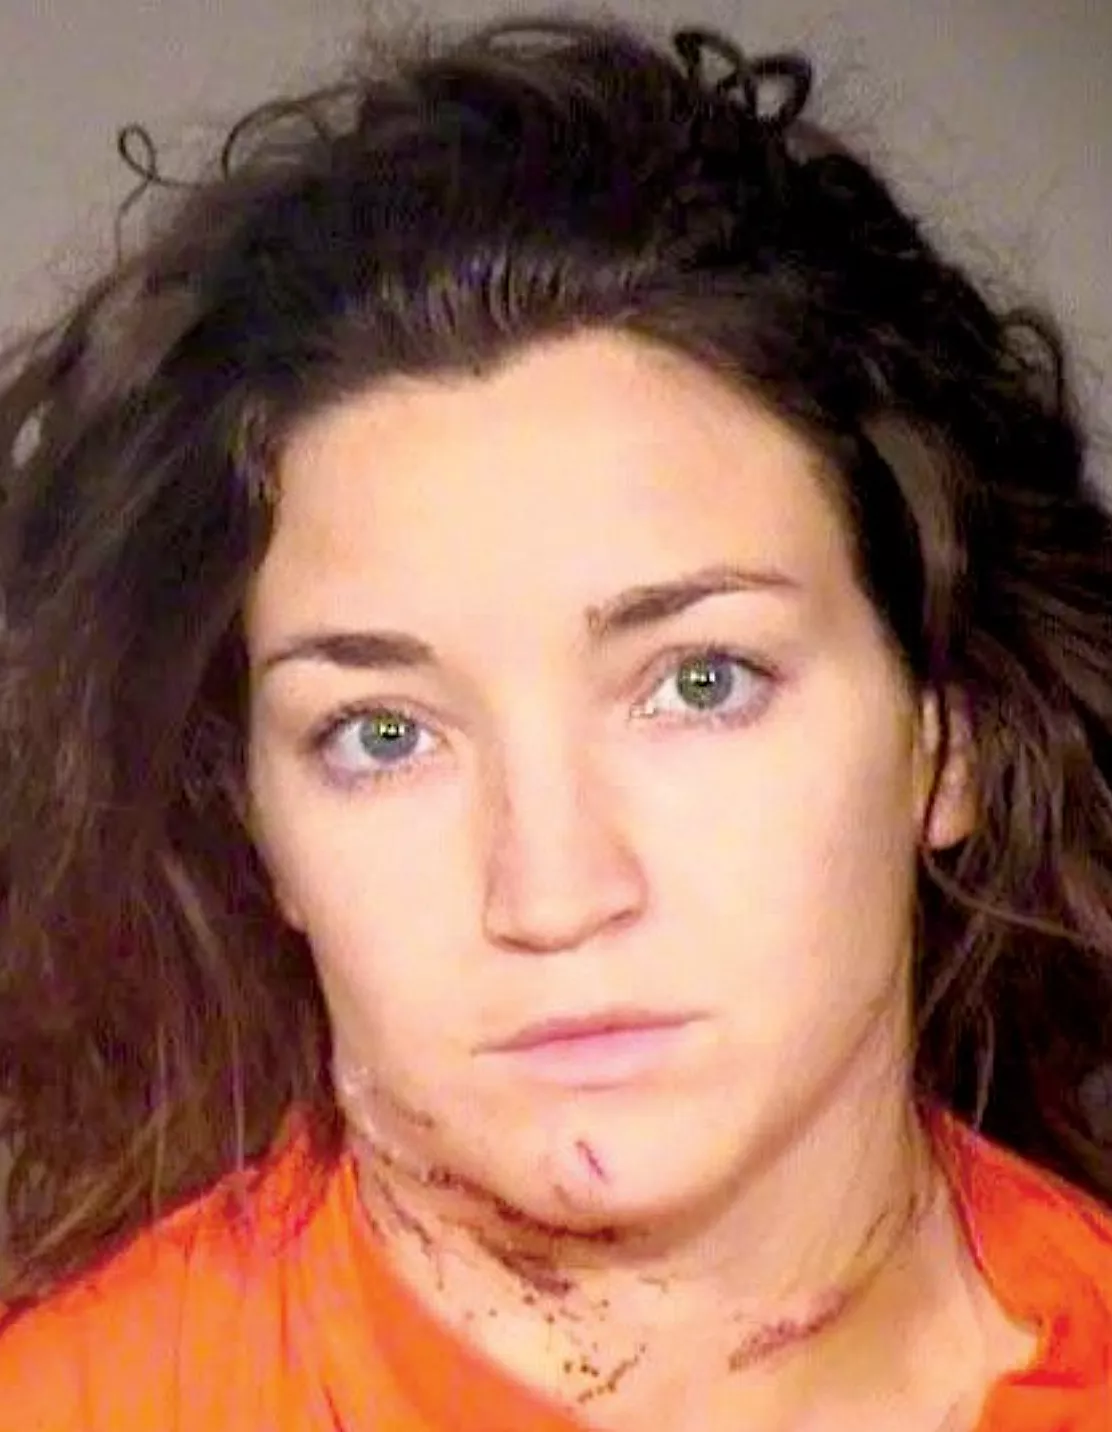 Woman Who Received No Prison Time For Killing Boyfriend Appeals Probation, Community Service Sentence